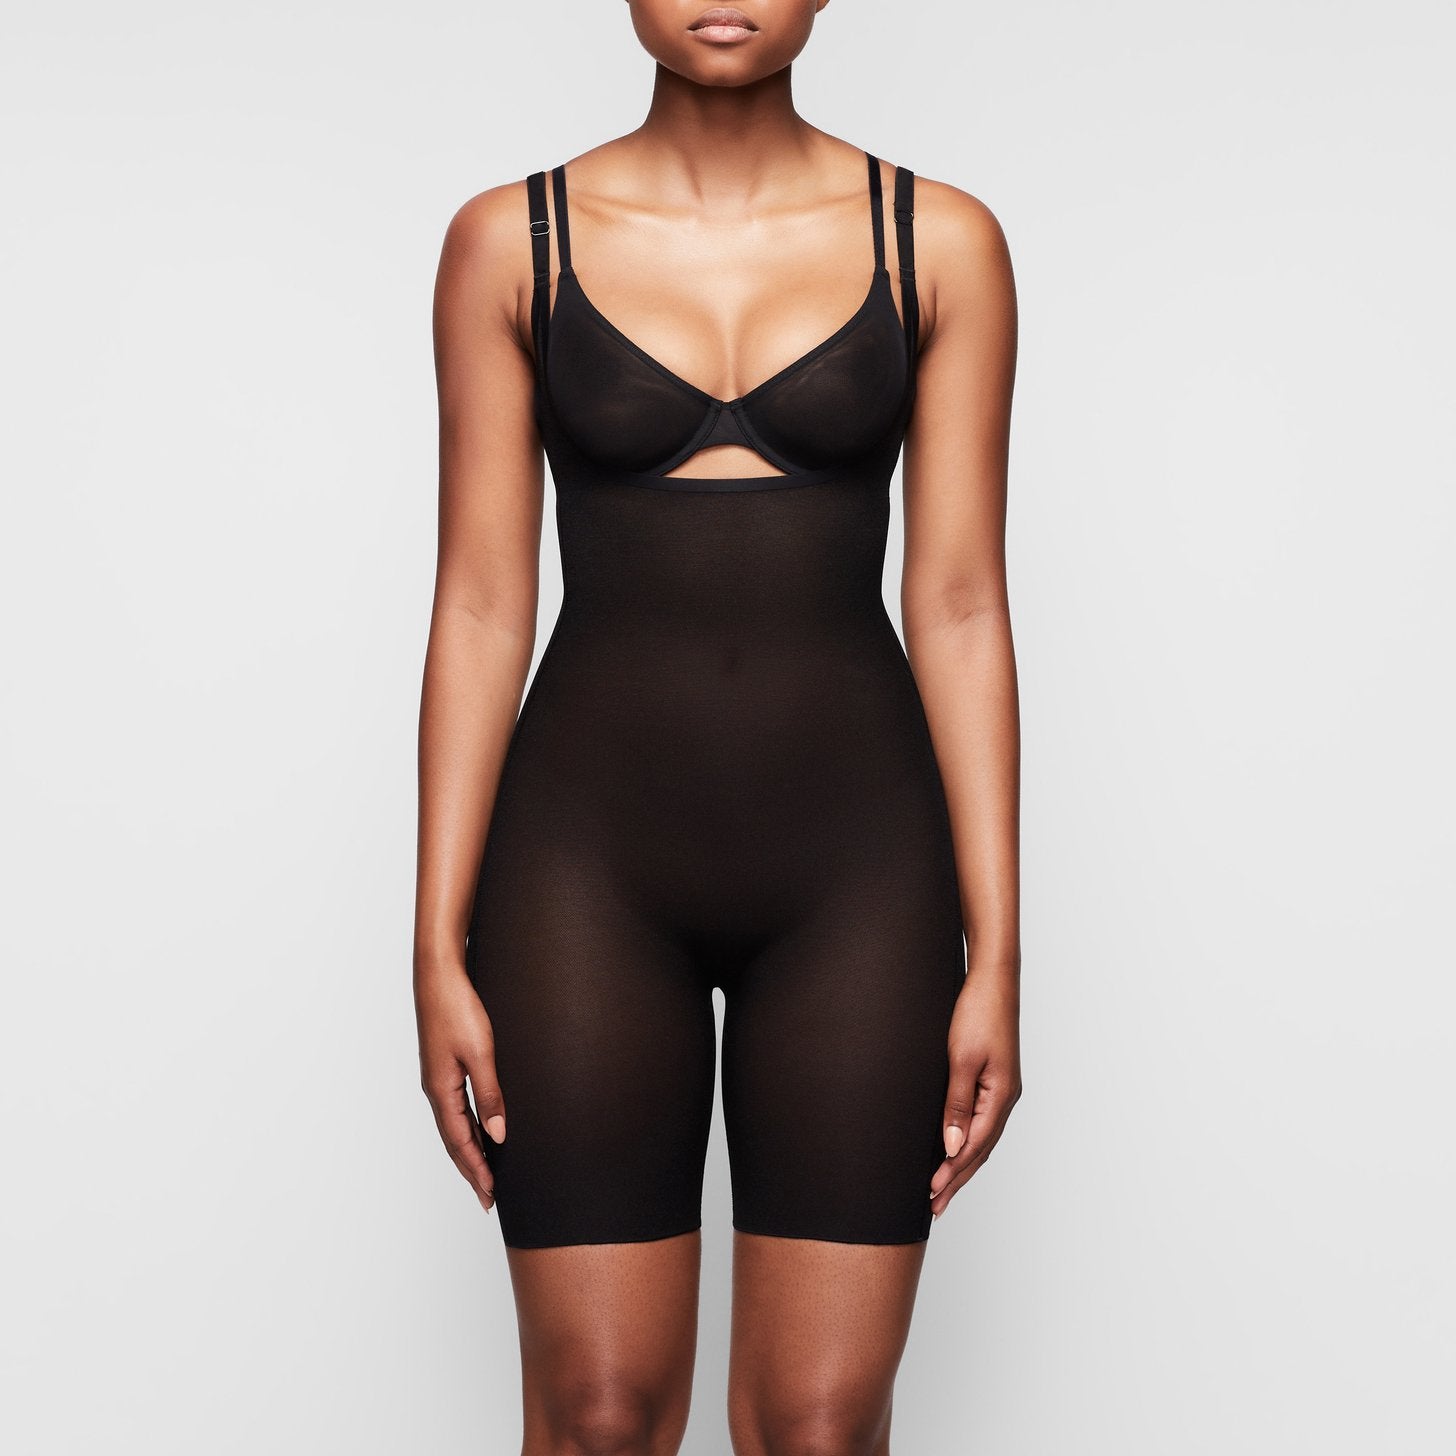 Kim Kardashian Smolders In Sheer Black Sculpted Bodysuit For Latest Skims  Instagram Video—OMG, Curves! - SHEfinds